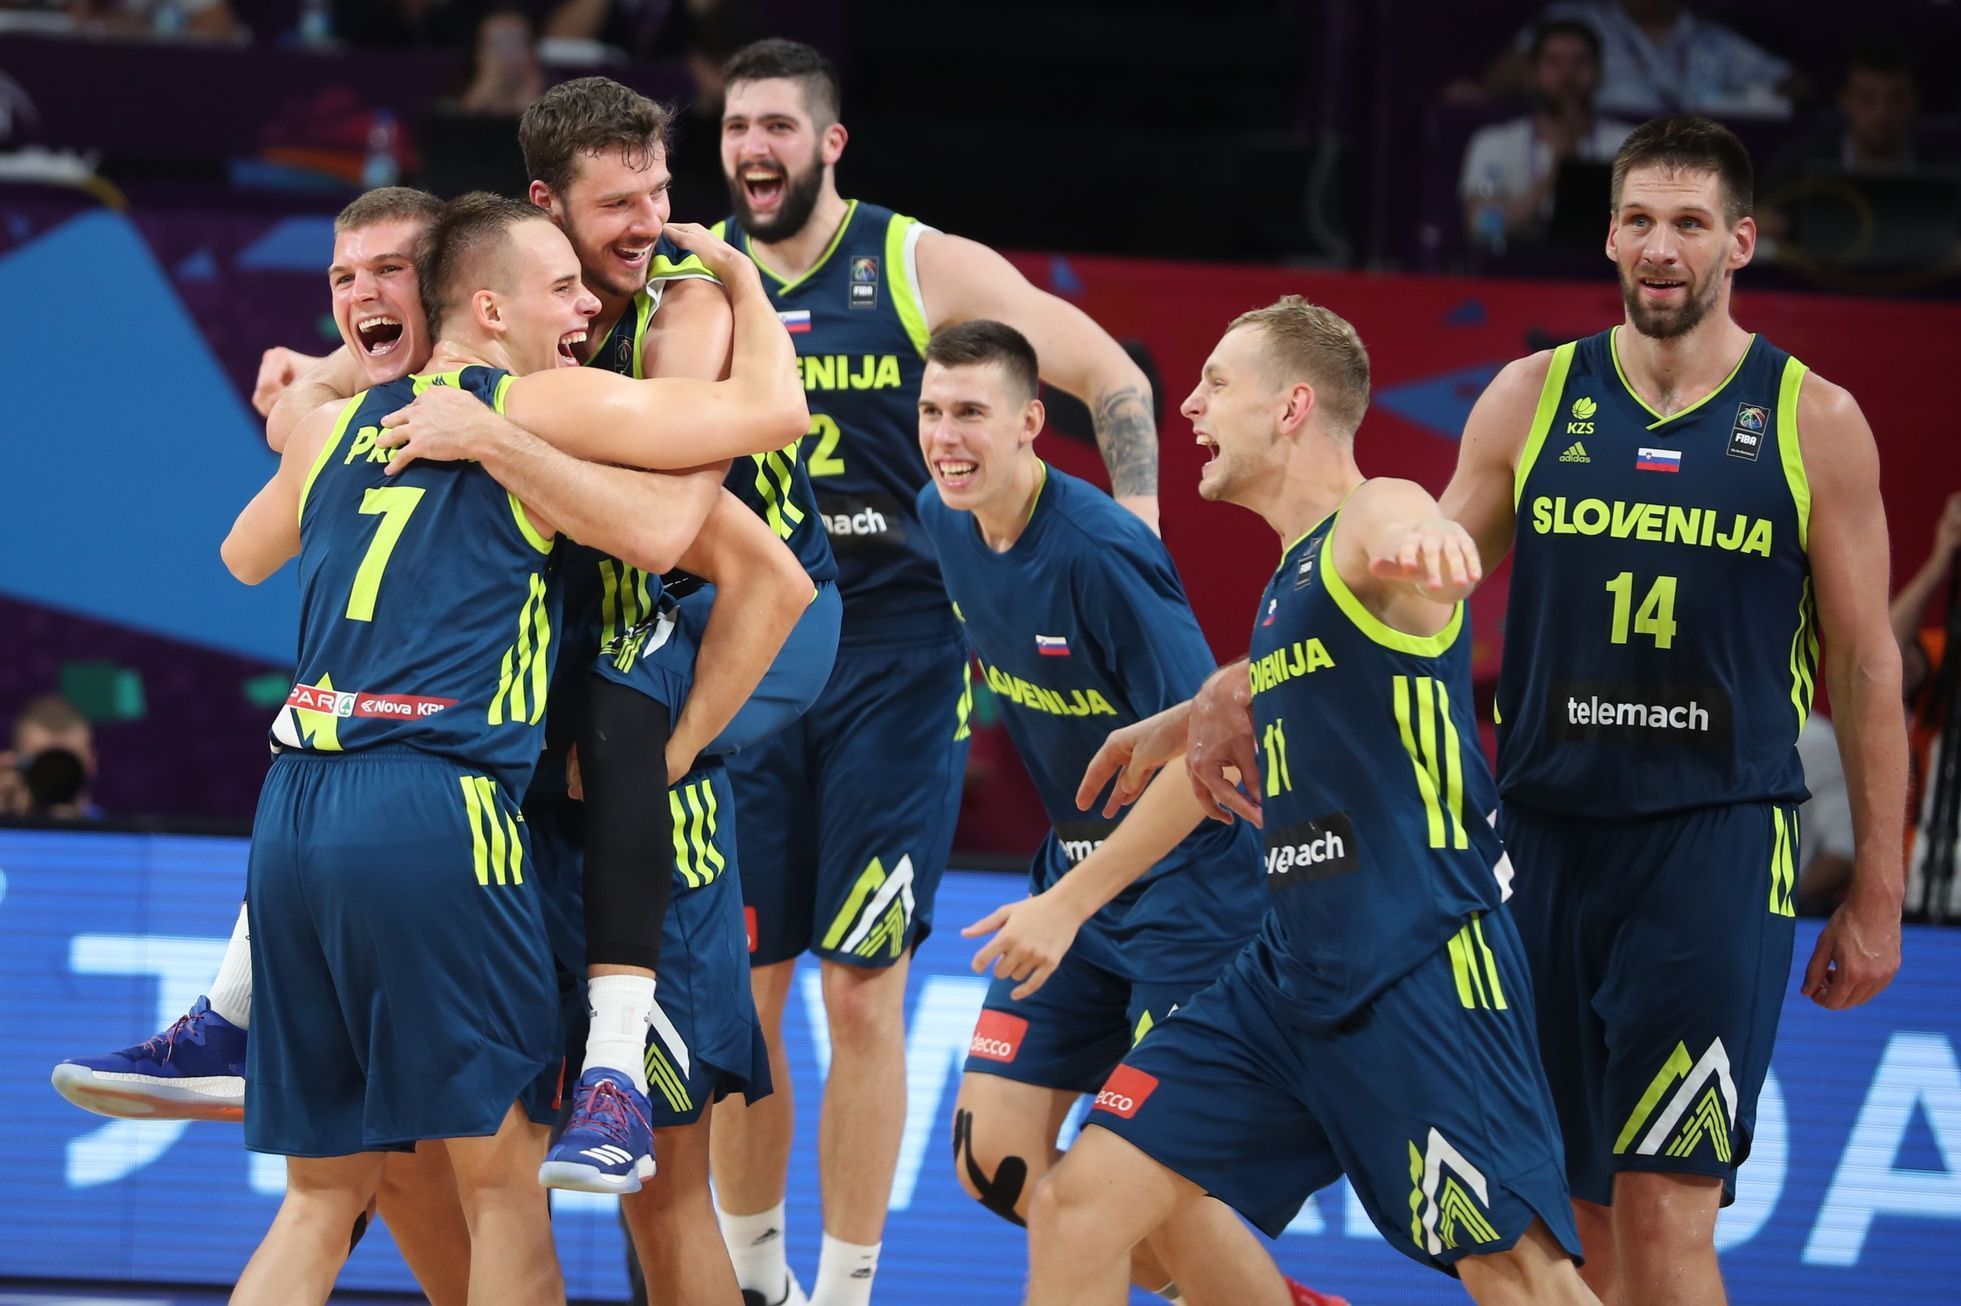 Radost Slovinců po postupu do finále ME v basketbalu